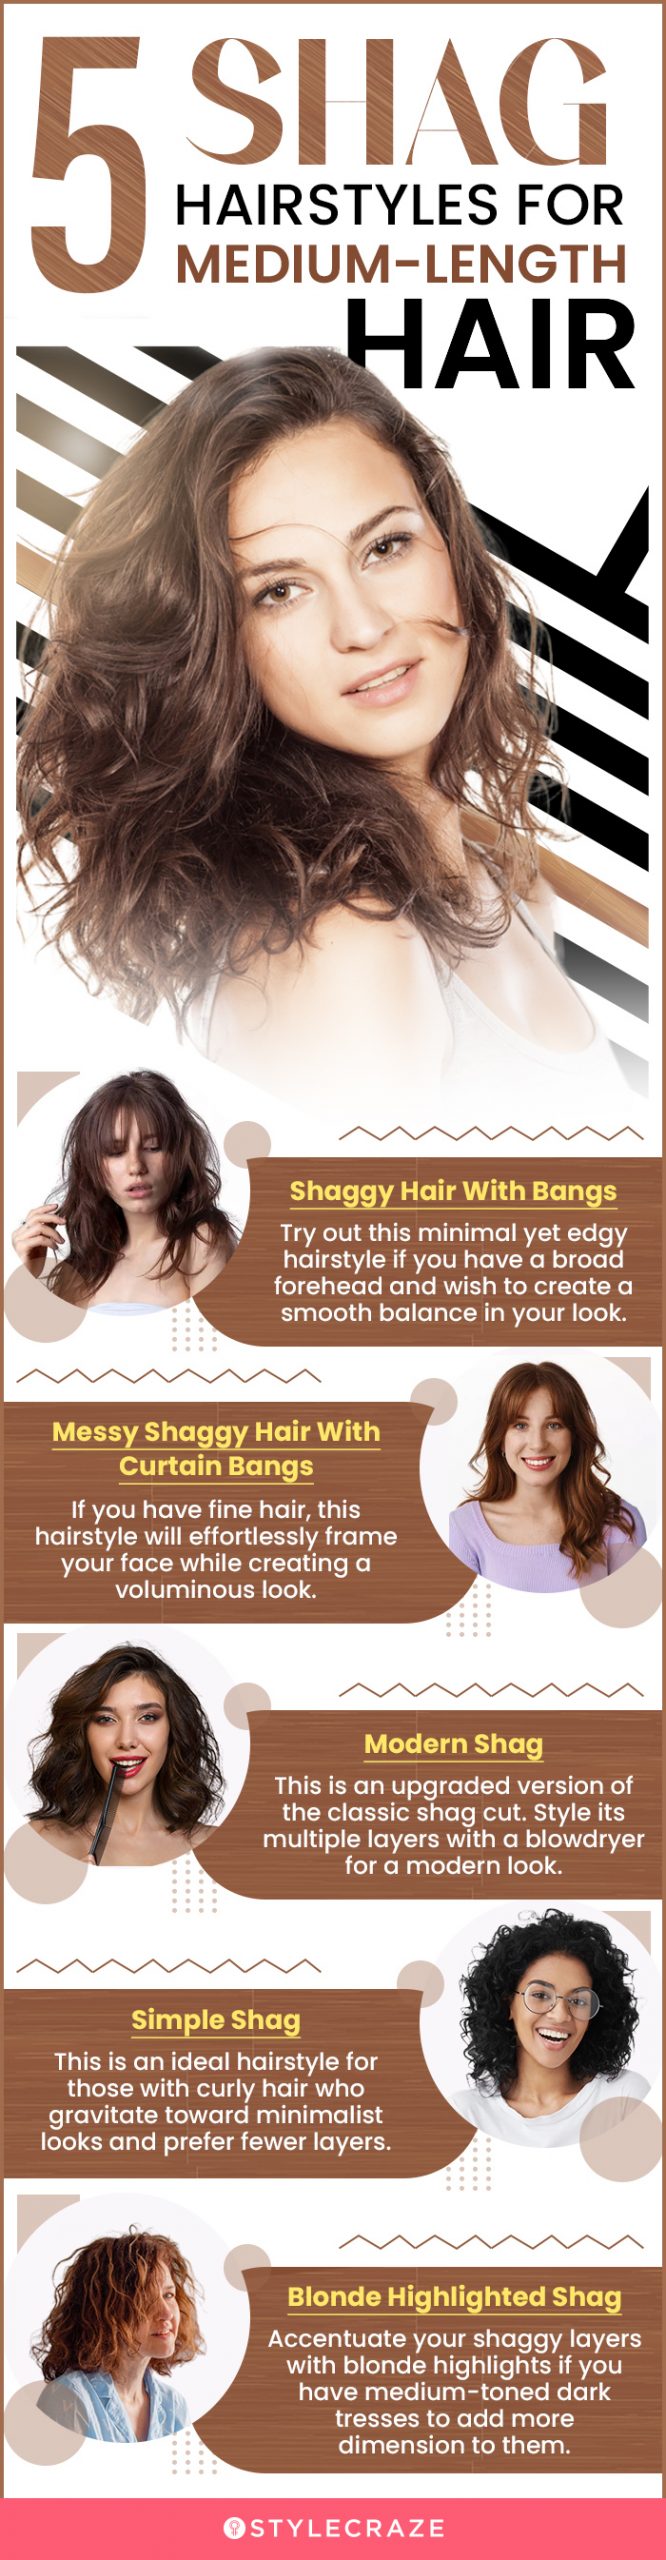 5 stunning shag hairstyles for medium length hair (infographic)